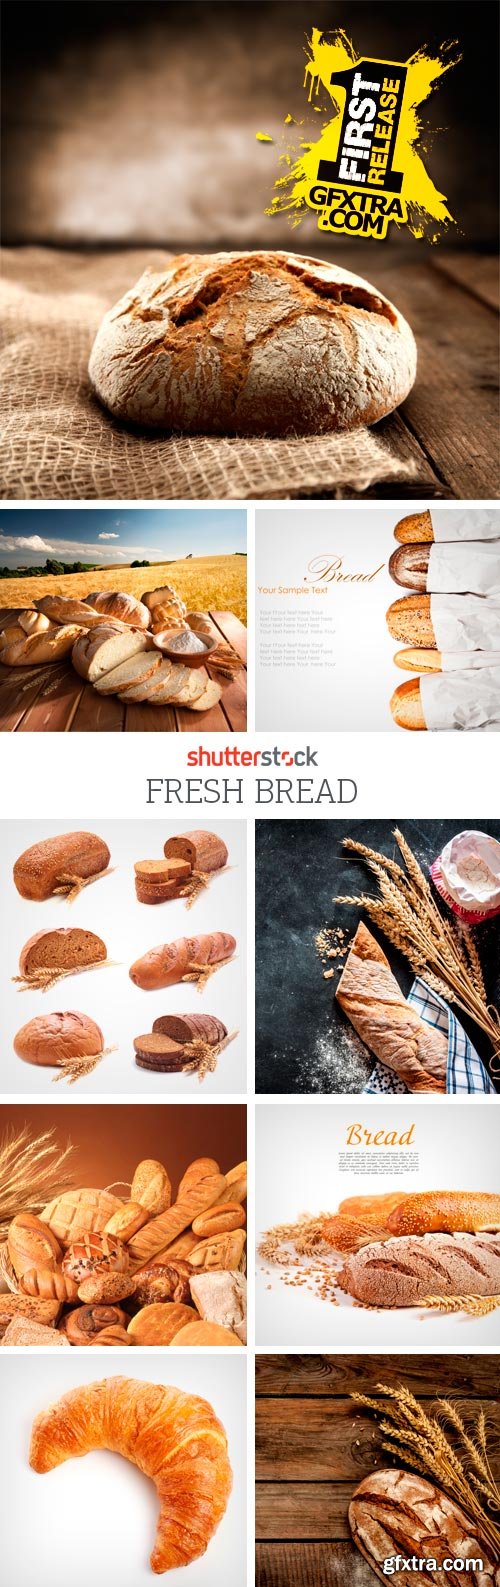 Amazing SS - Fresh Bread, 25xJPGs